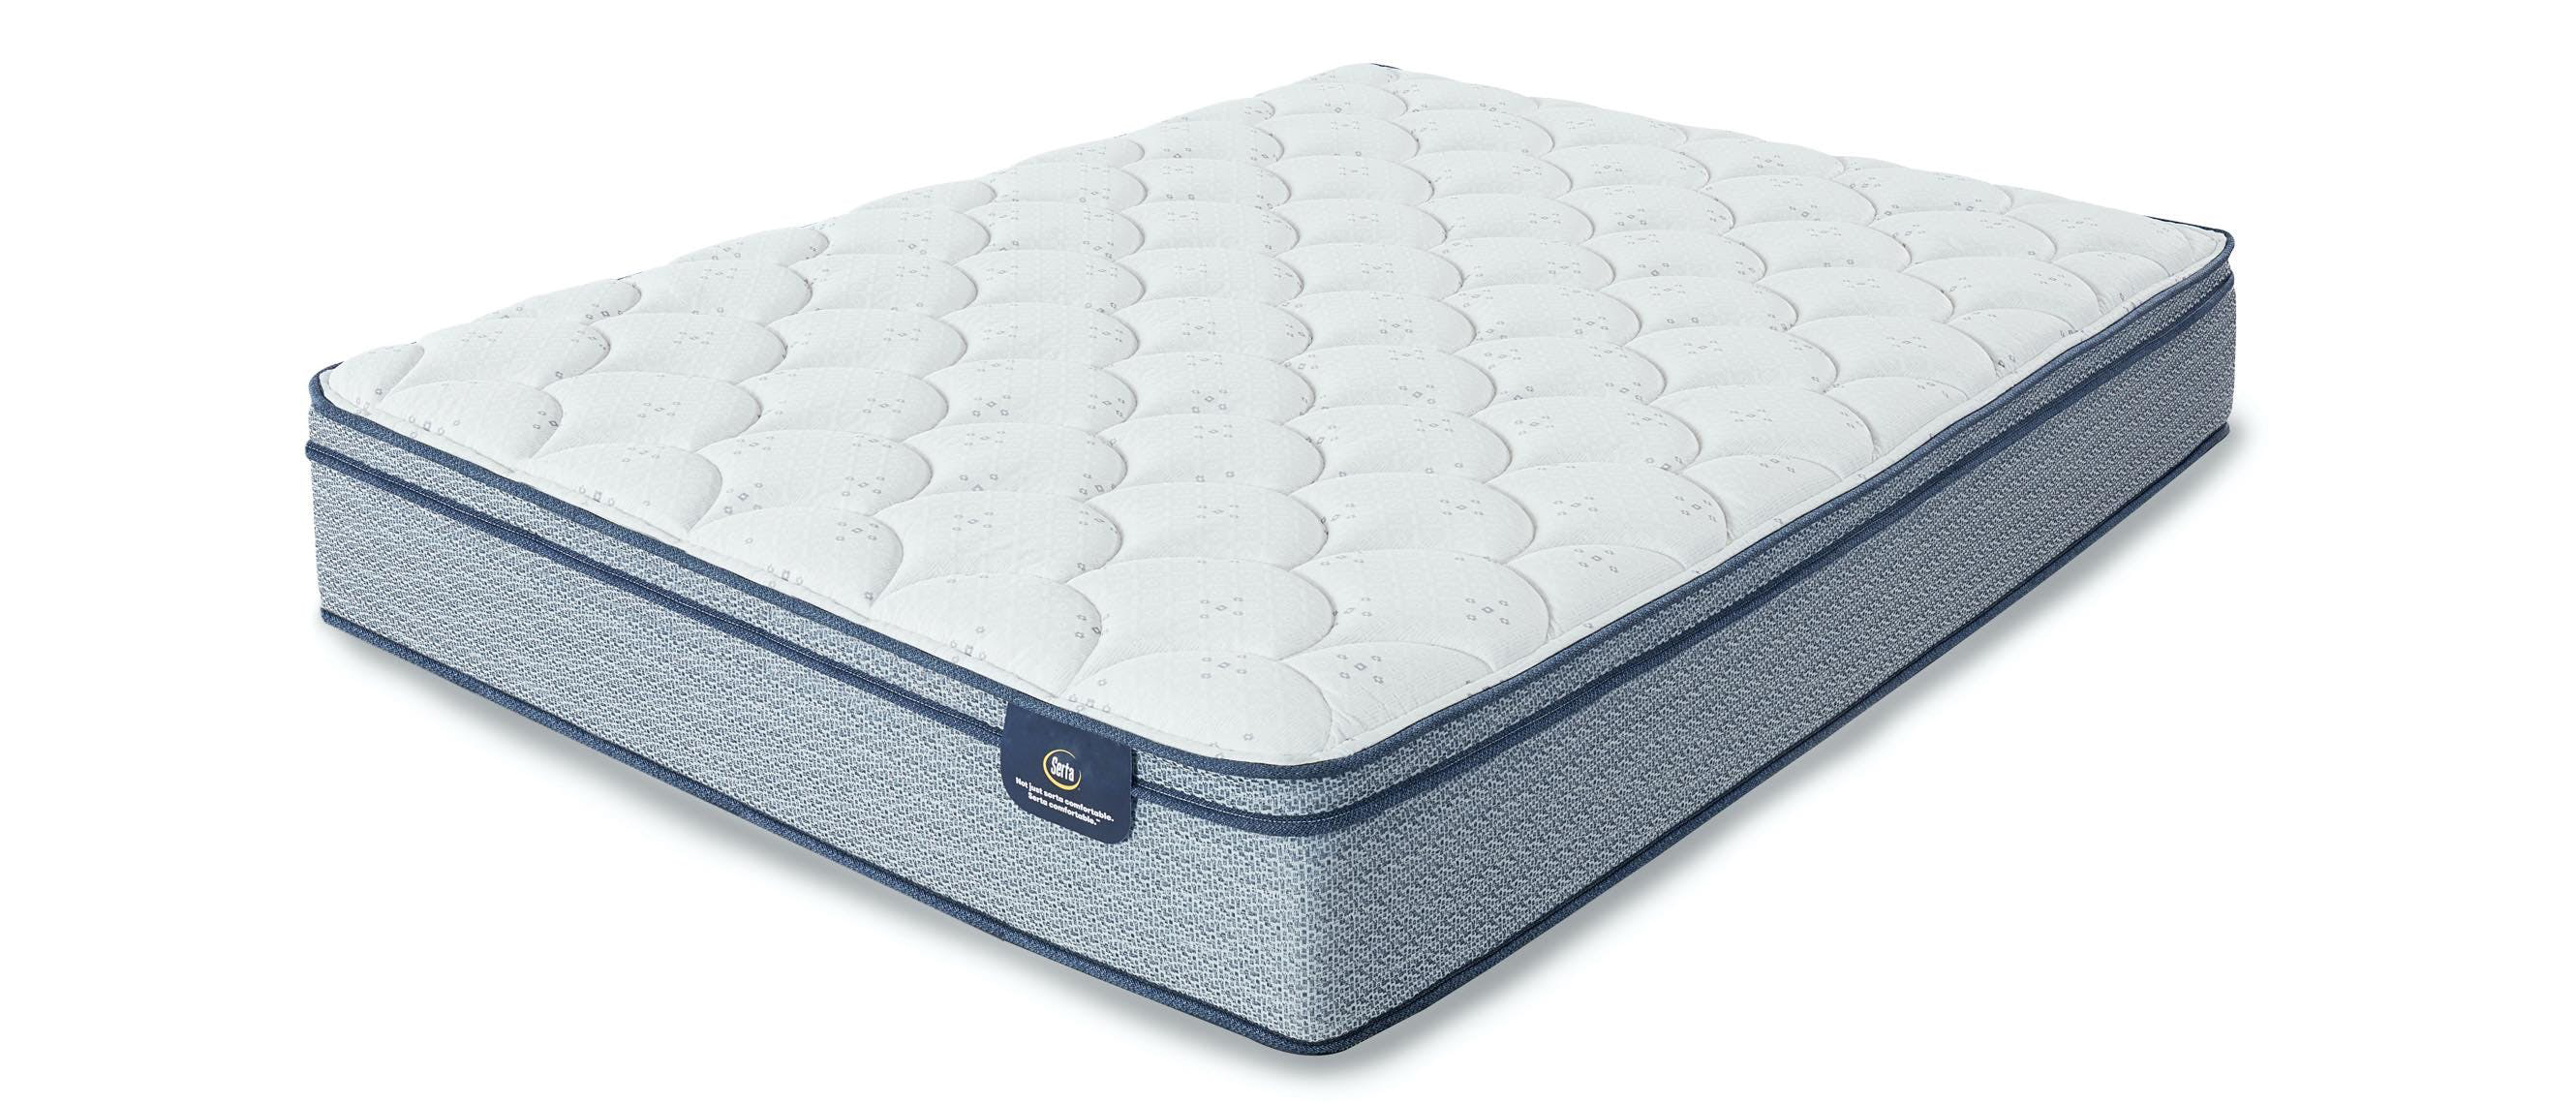 Today’s cheapest Serta mattress prices.